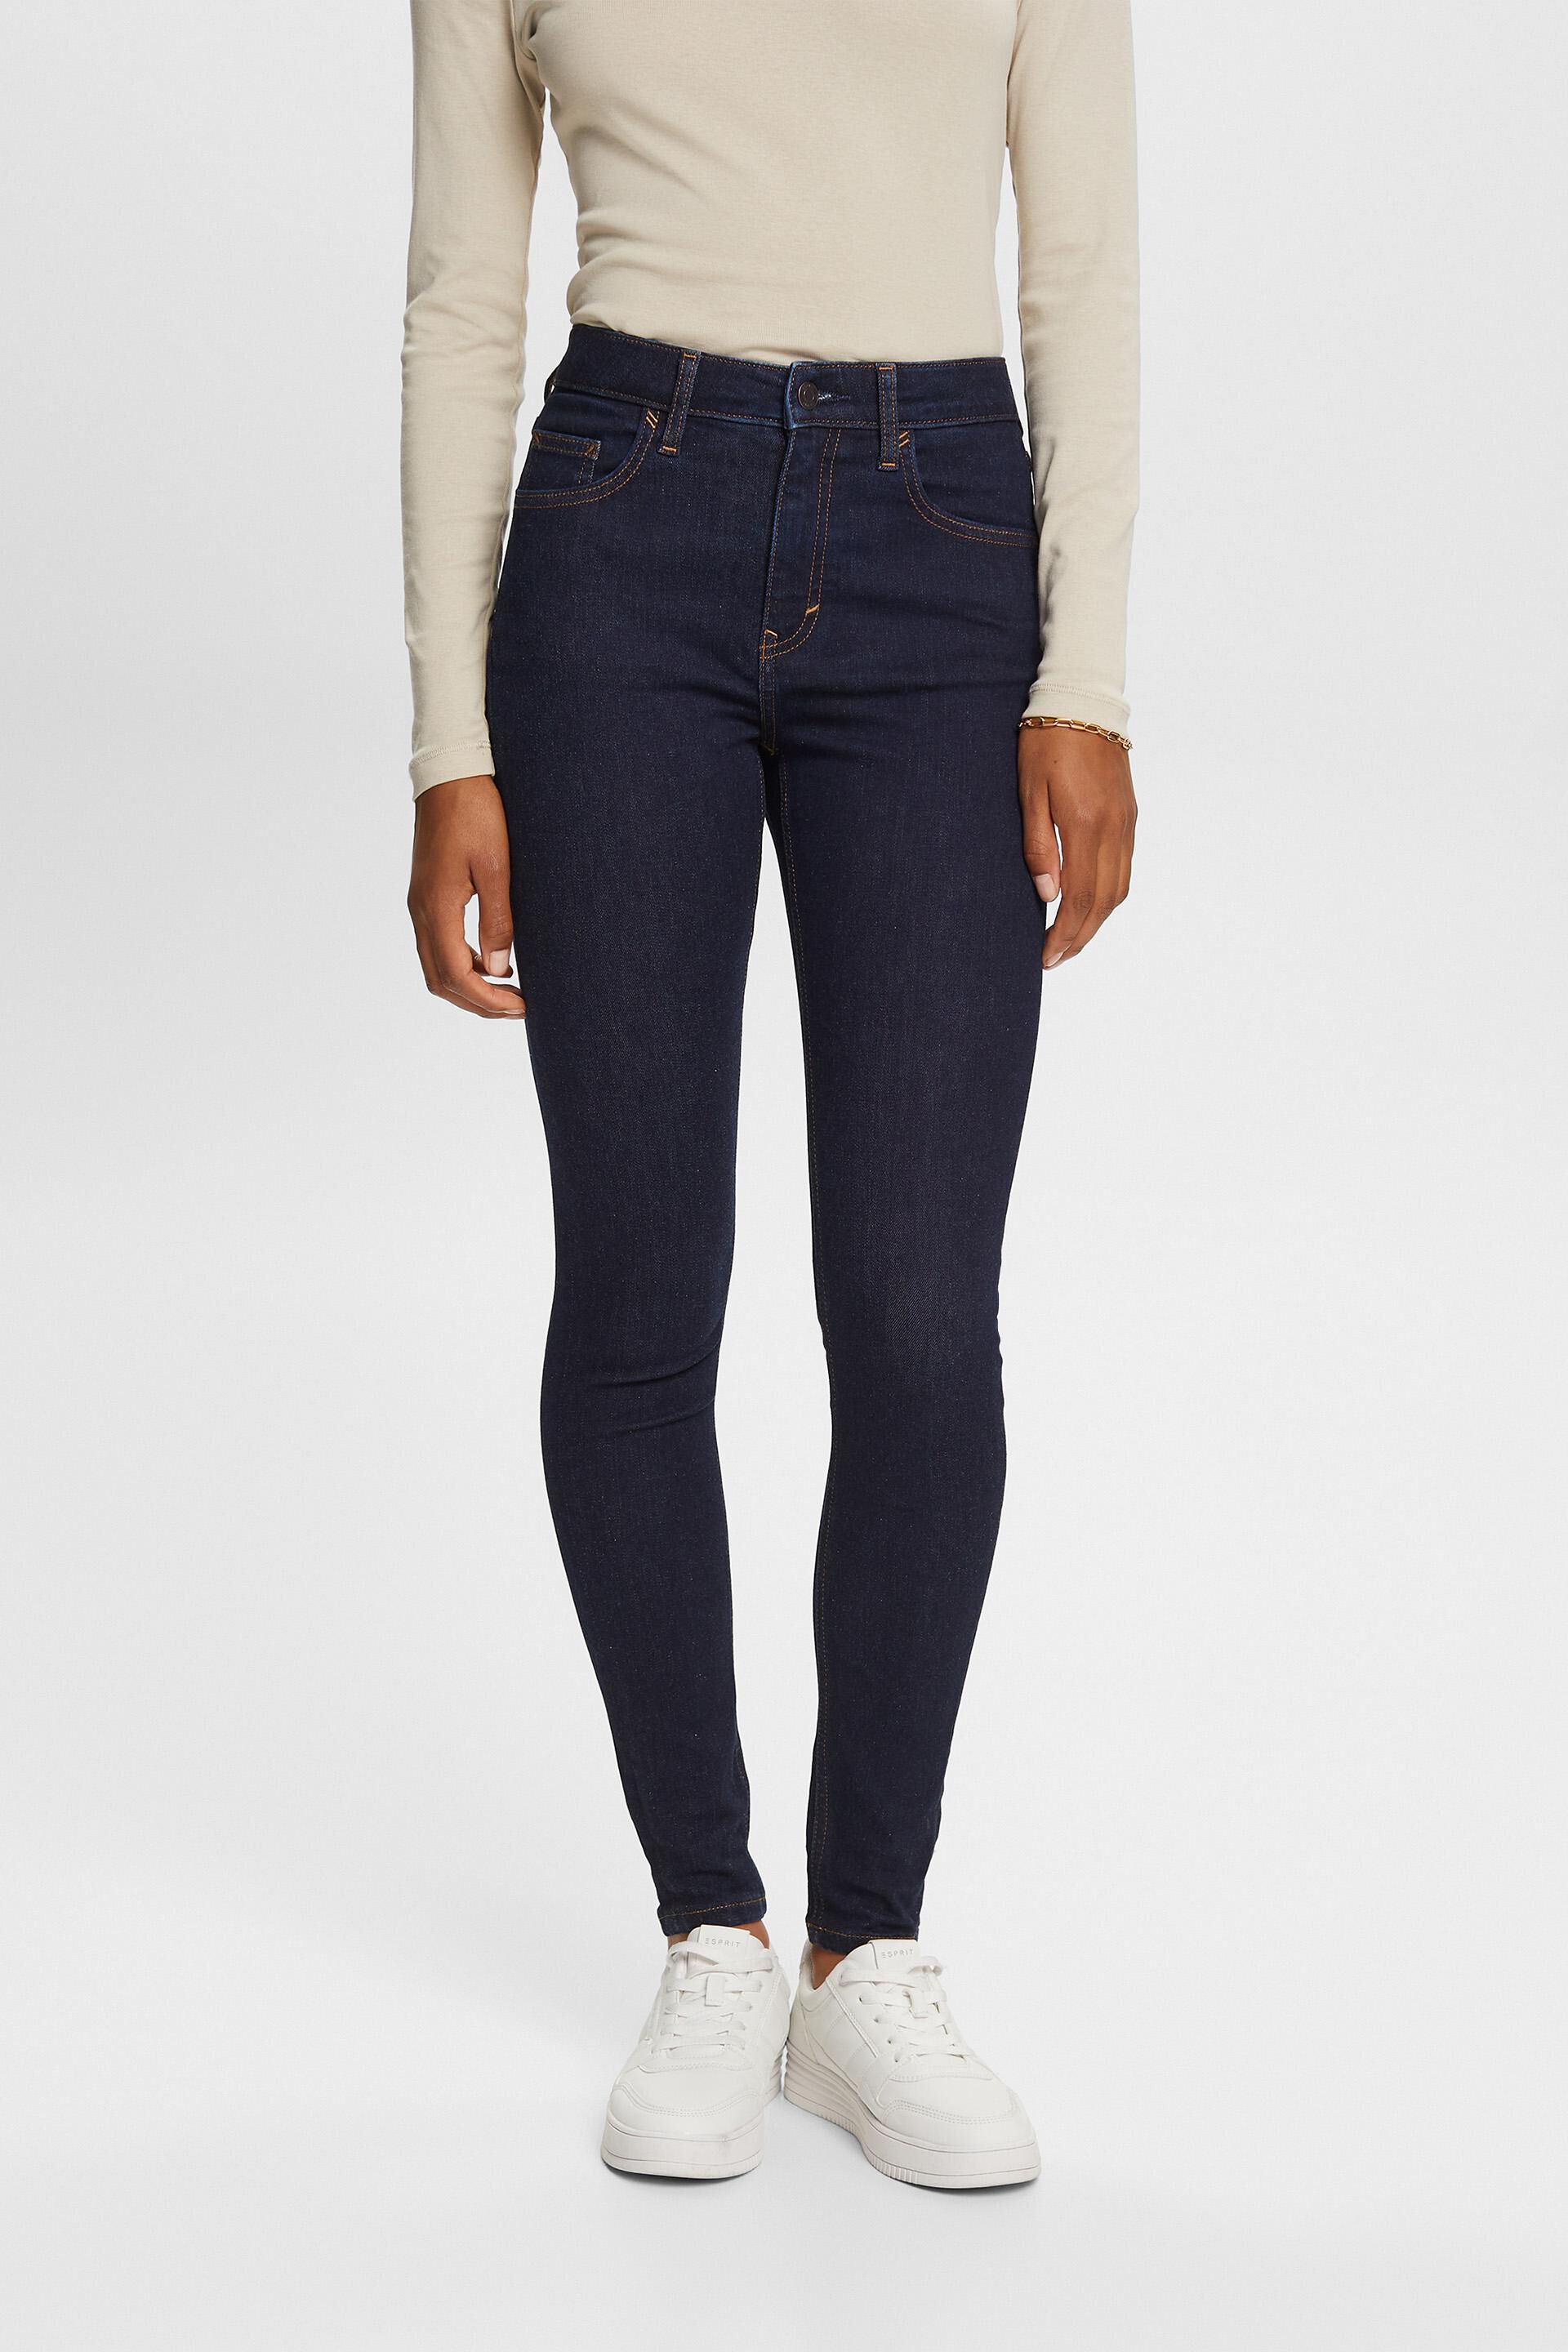 Esprit jeans, skinny cotton Highrise stretch